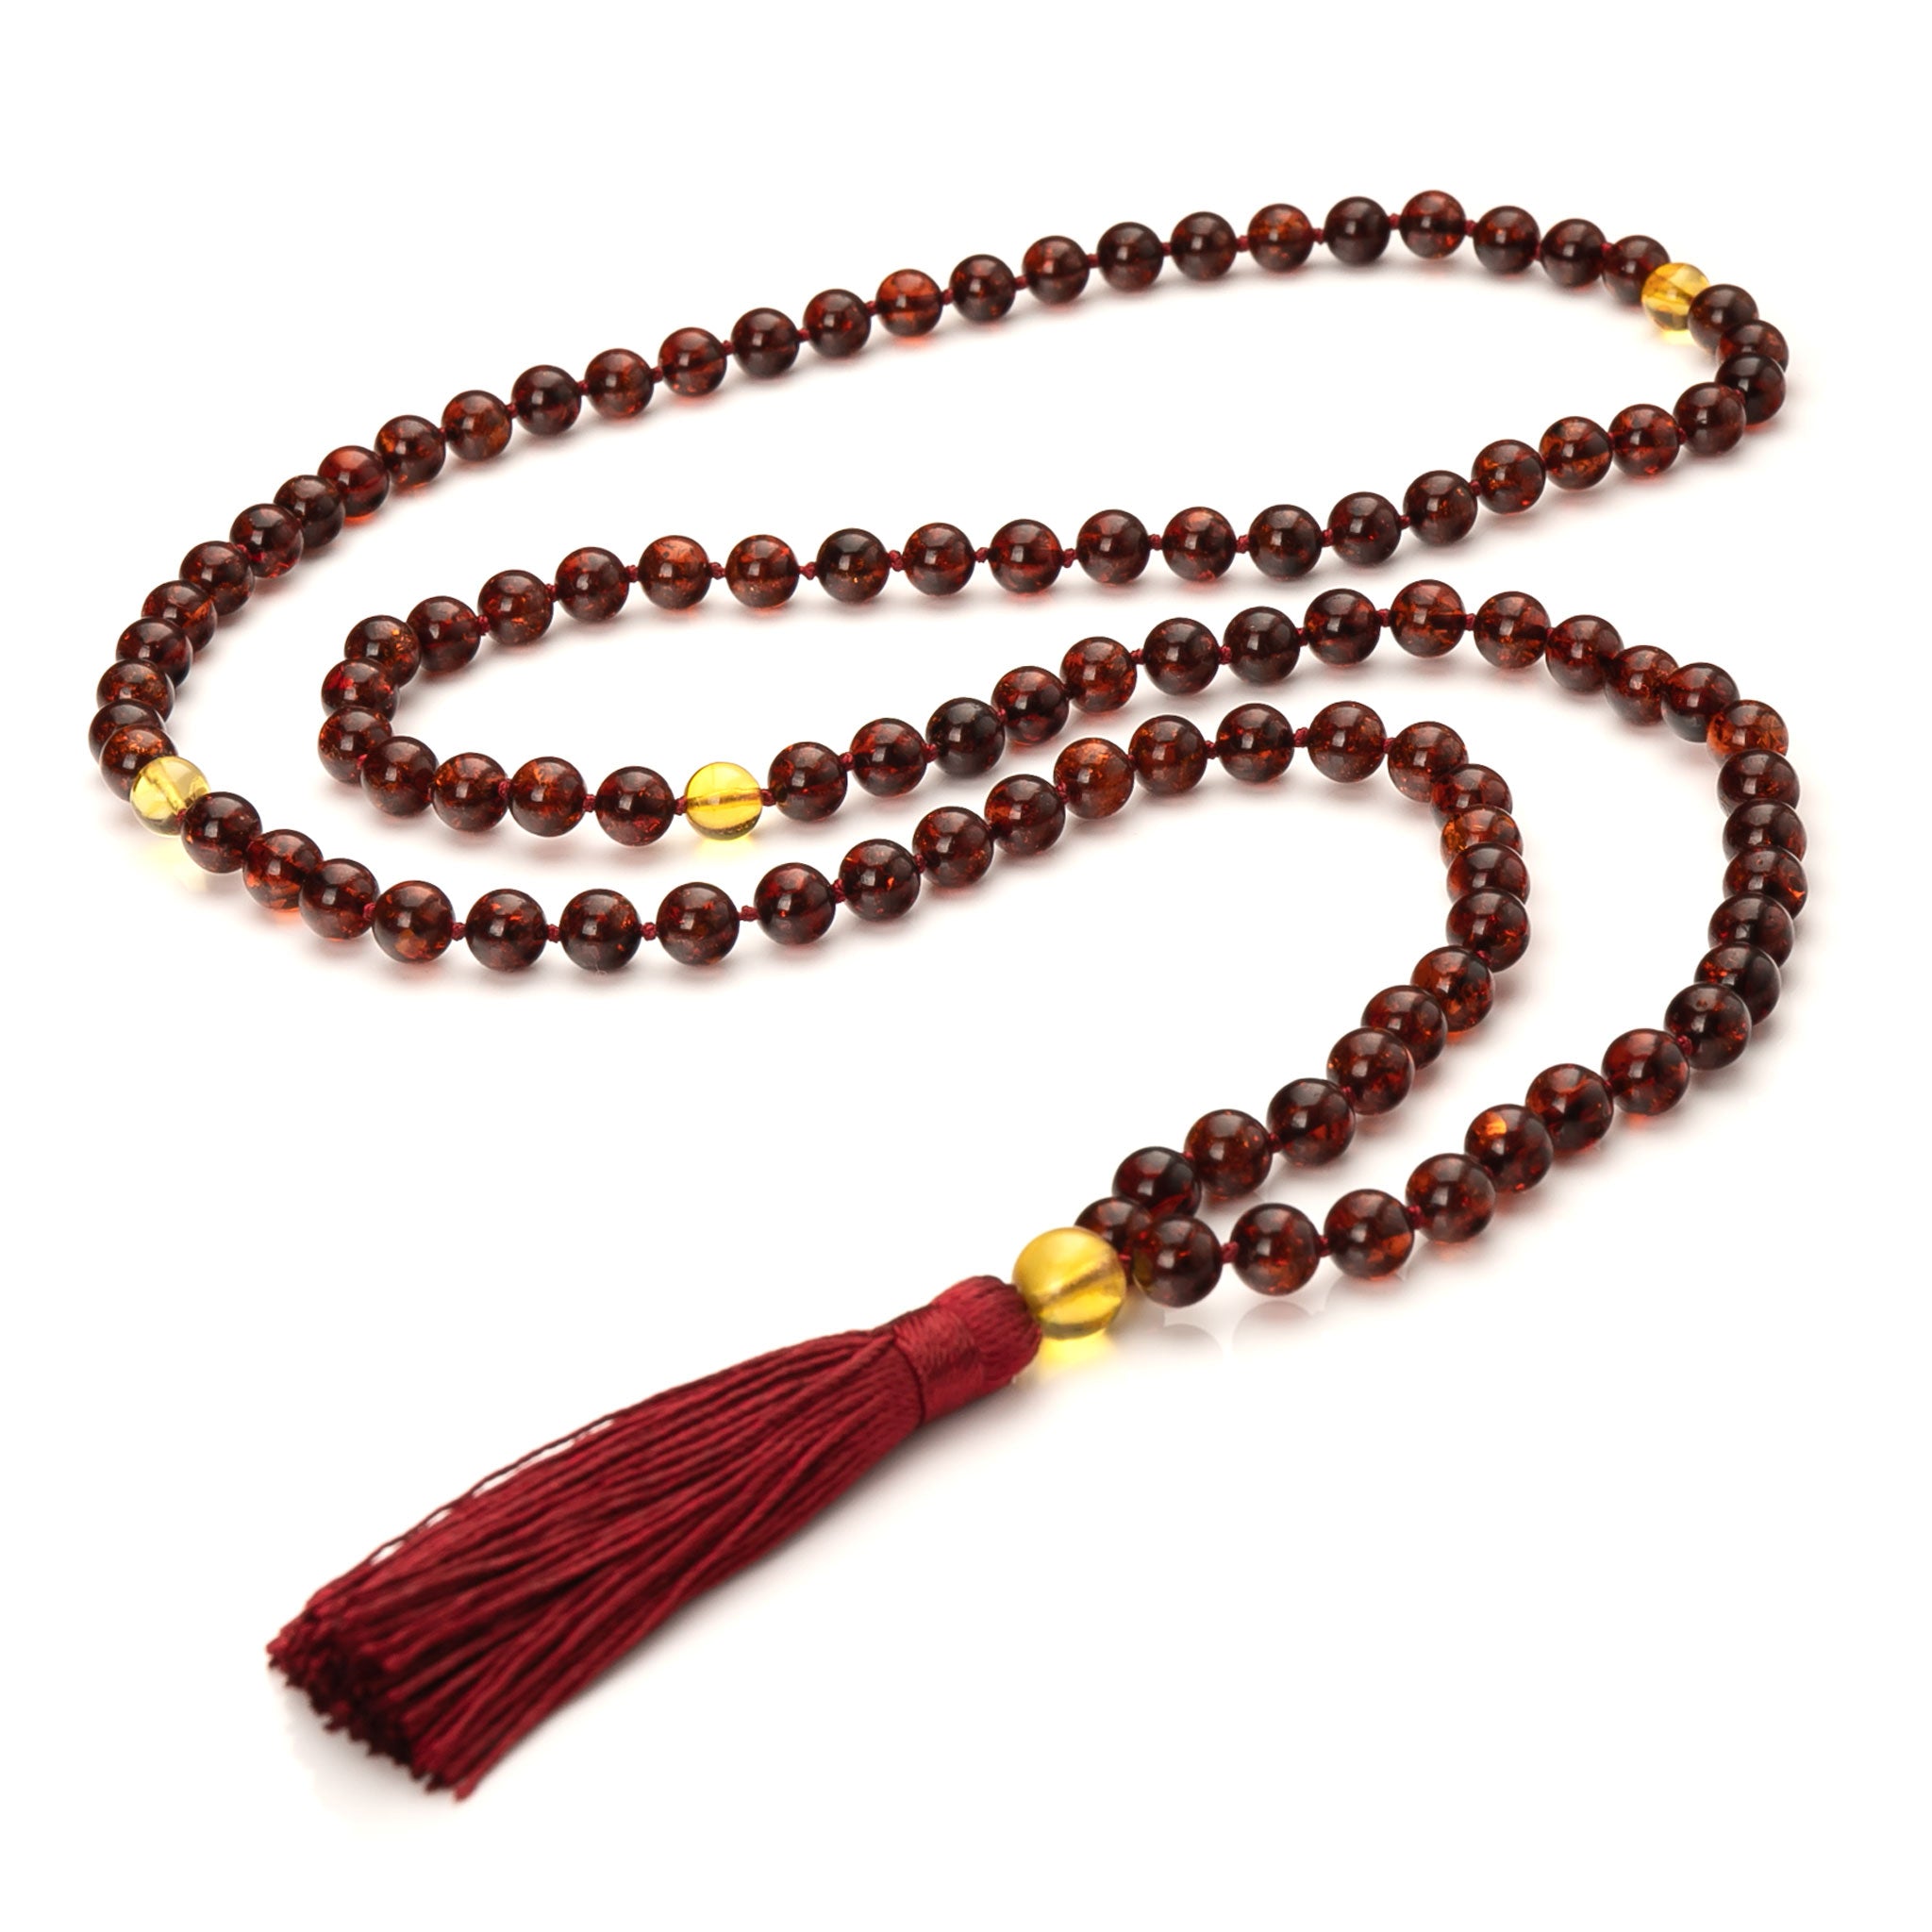 Rosewood Meditation Mala Prayer Beads